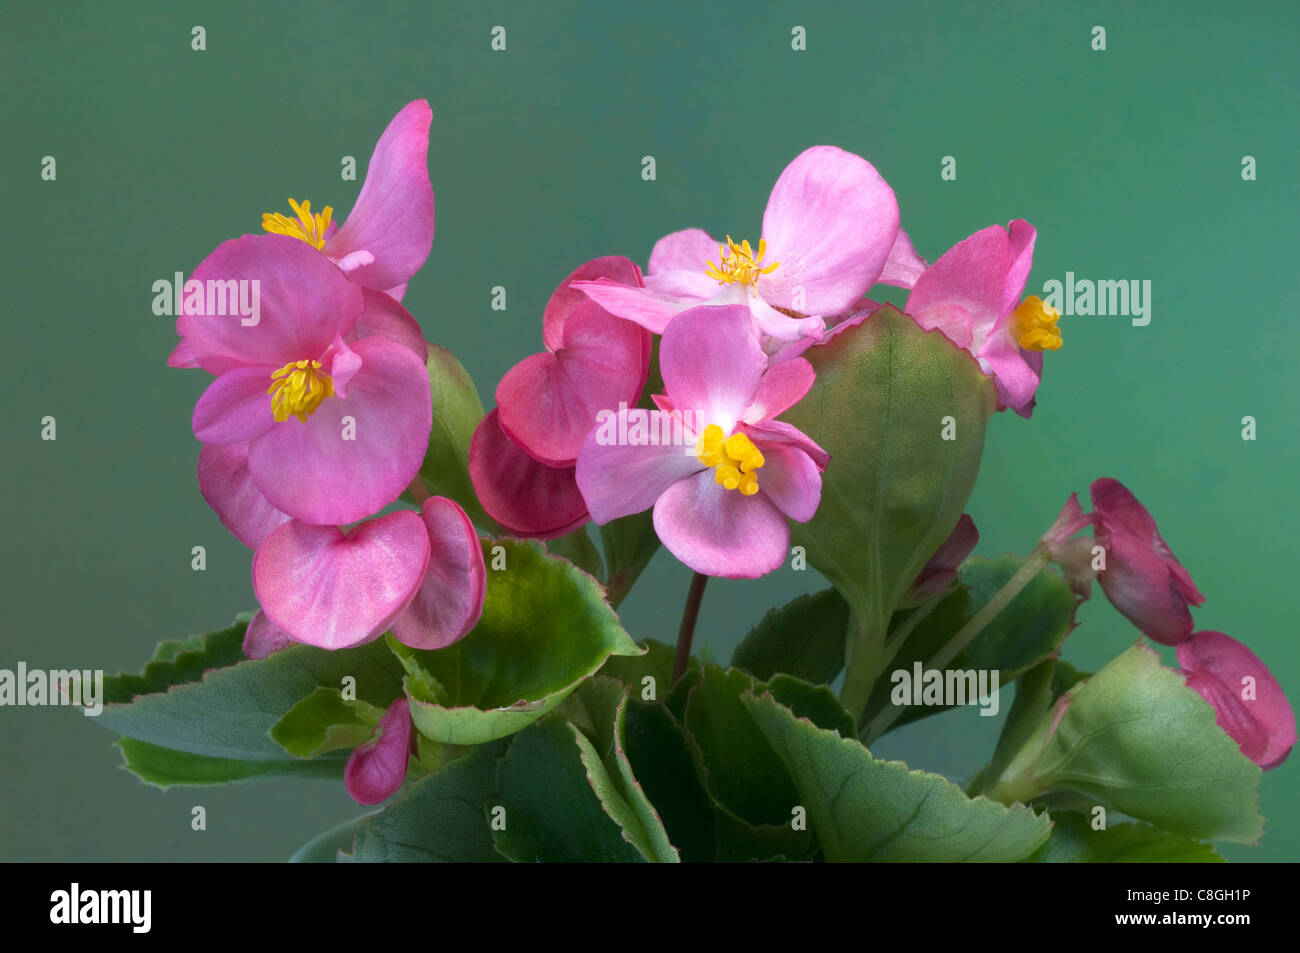 Wax Begonia, Wax-leaf Begonia (Begonia x semperfloren-cultorum), pink flowering plant. Stock Photo